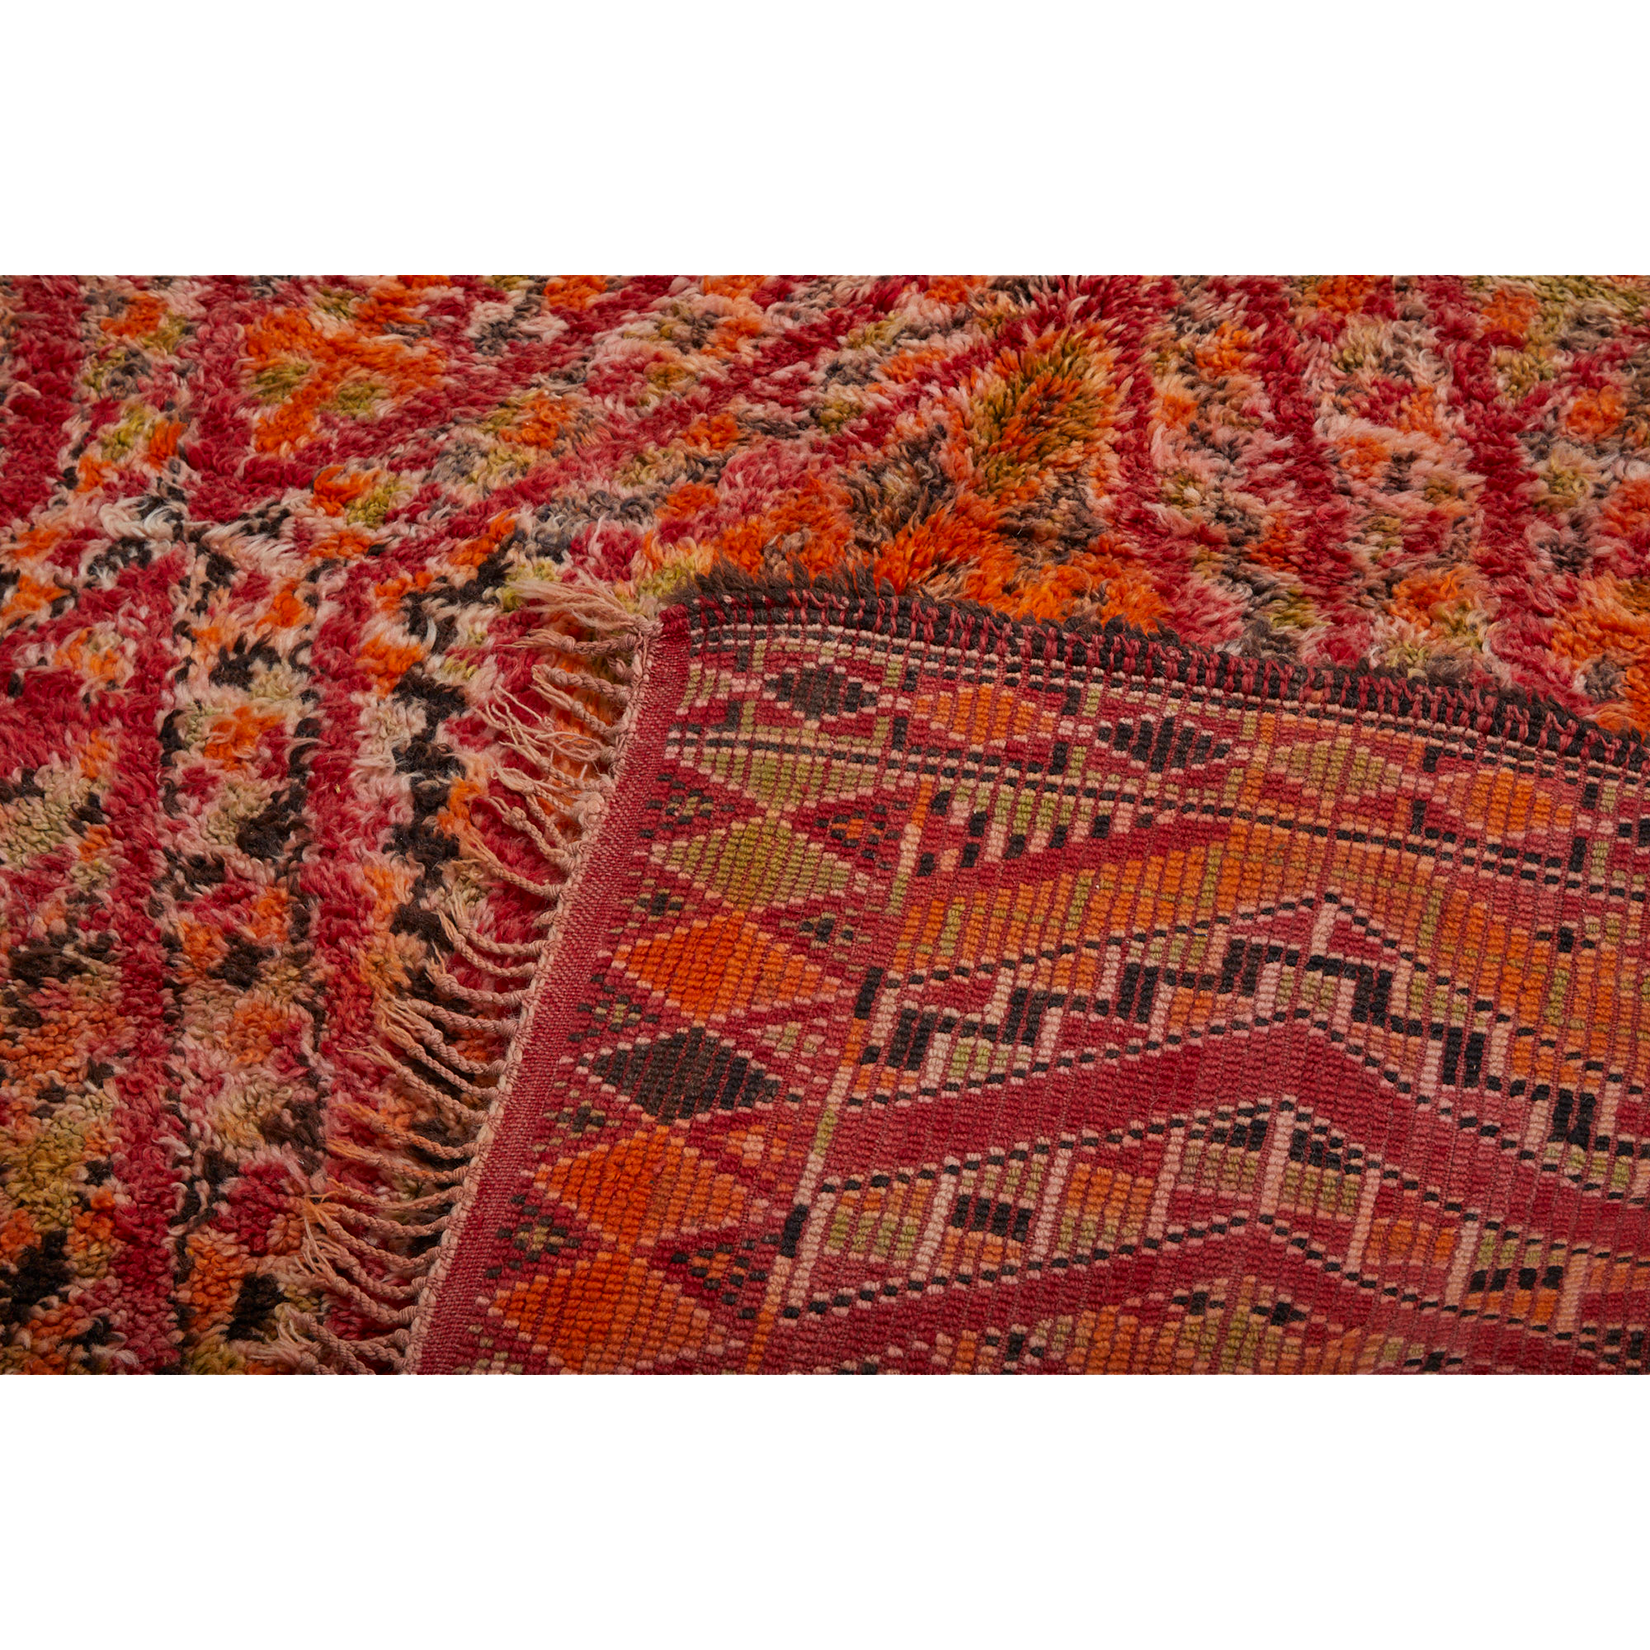 Authentic beni mguild moroccan berber rug in red - Kantara | Moroccan Rugs